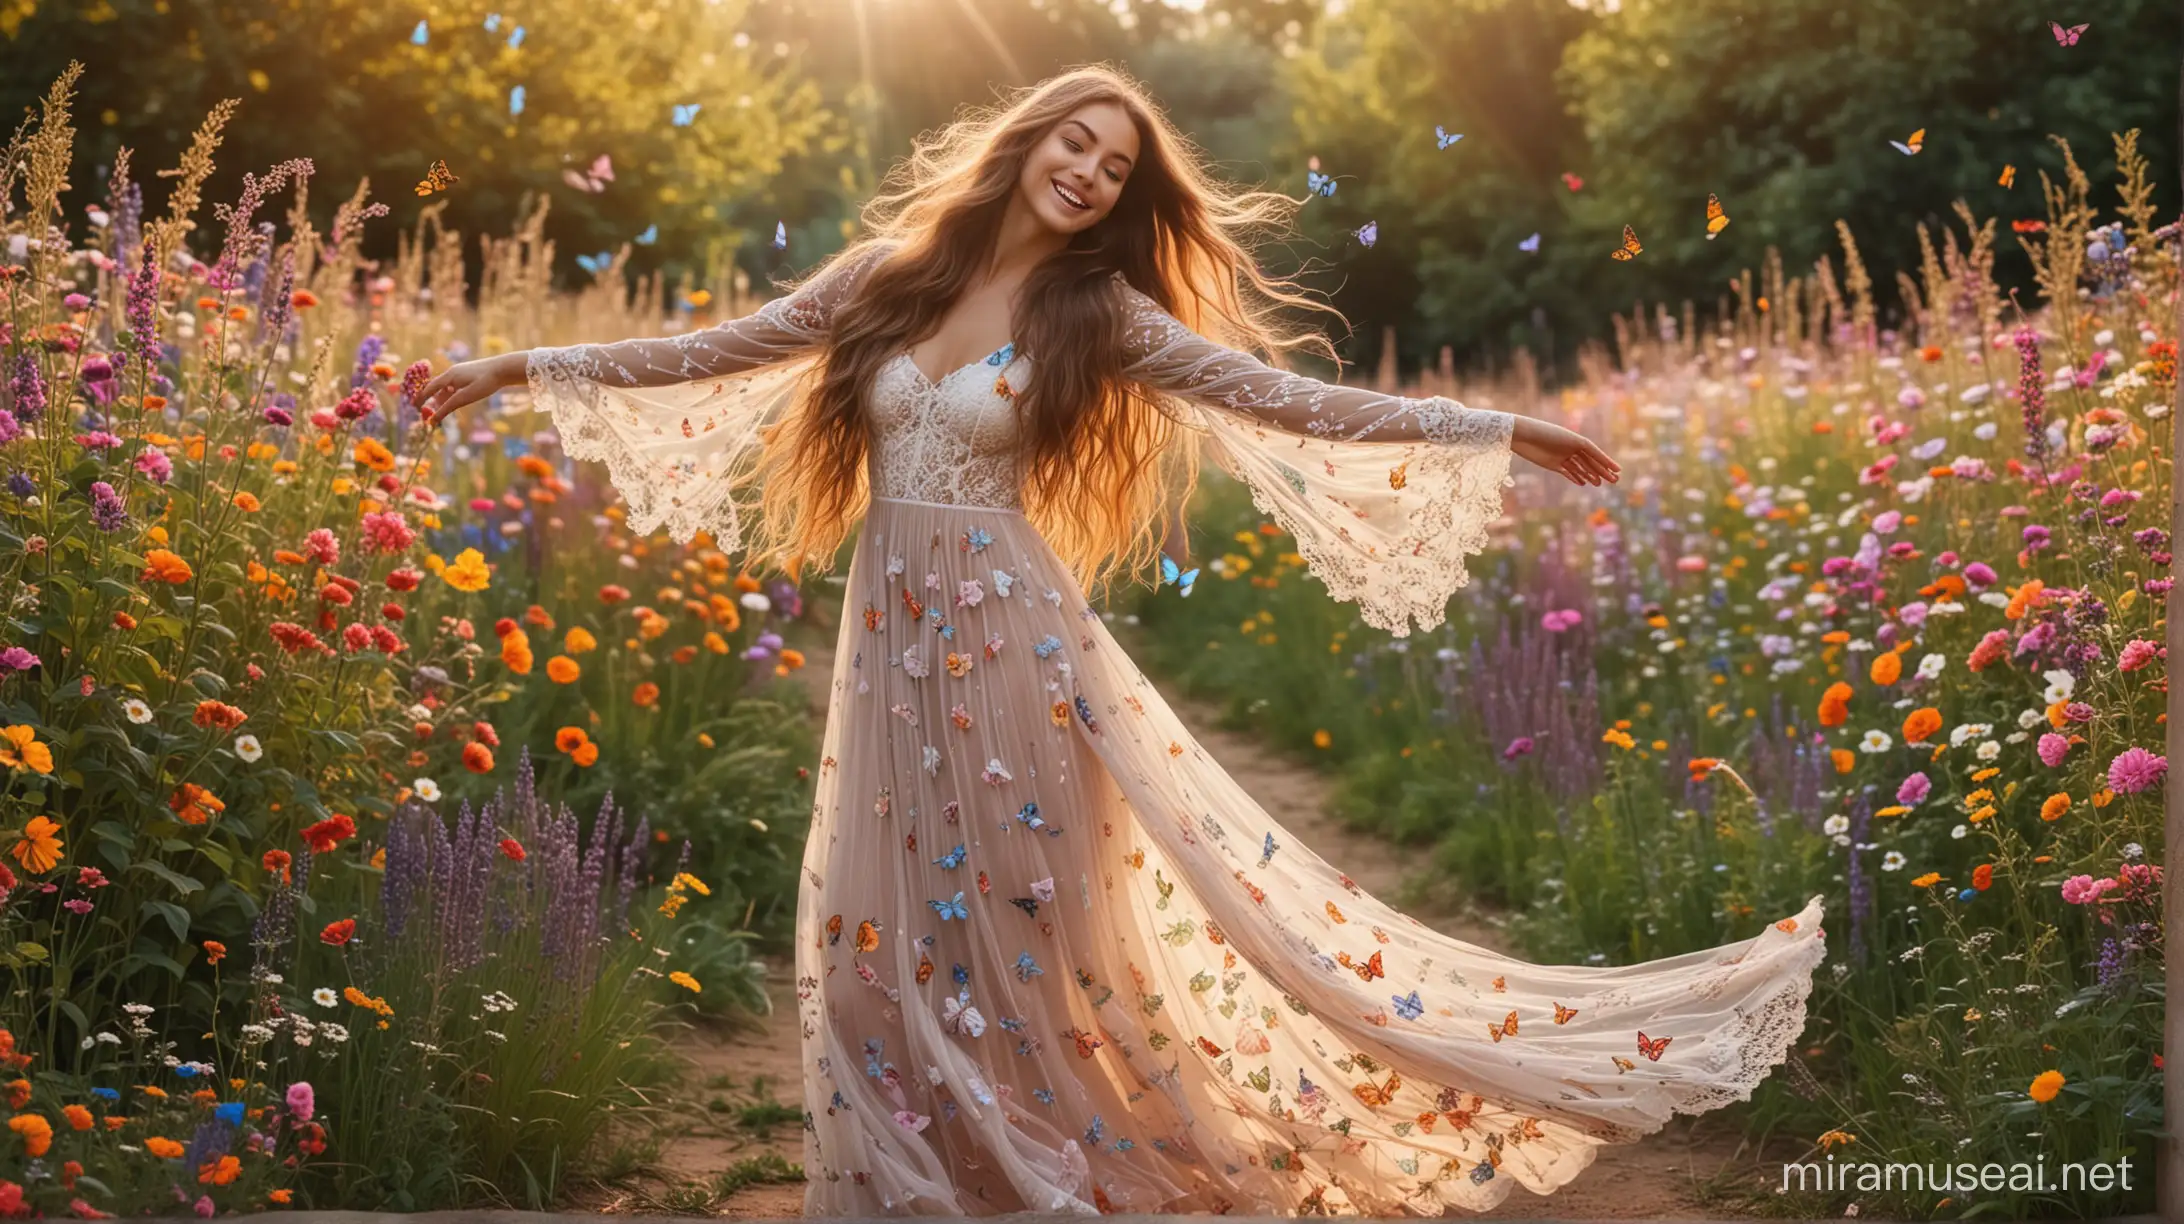 Enchanting NeonRainbow Garden Joyful Woman with Extra Long Hair Dancing Among Flowers